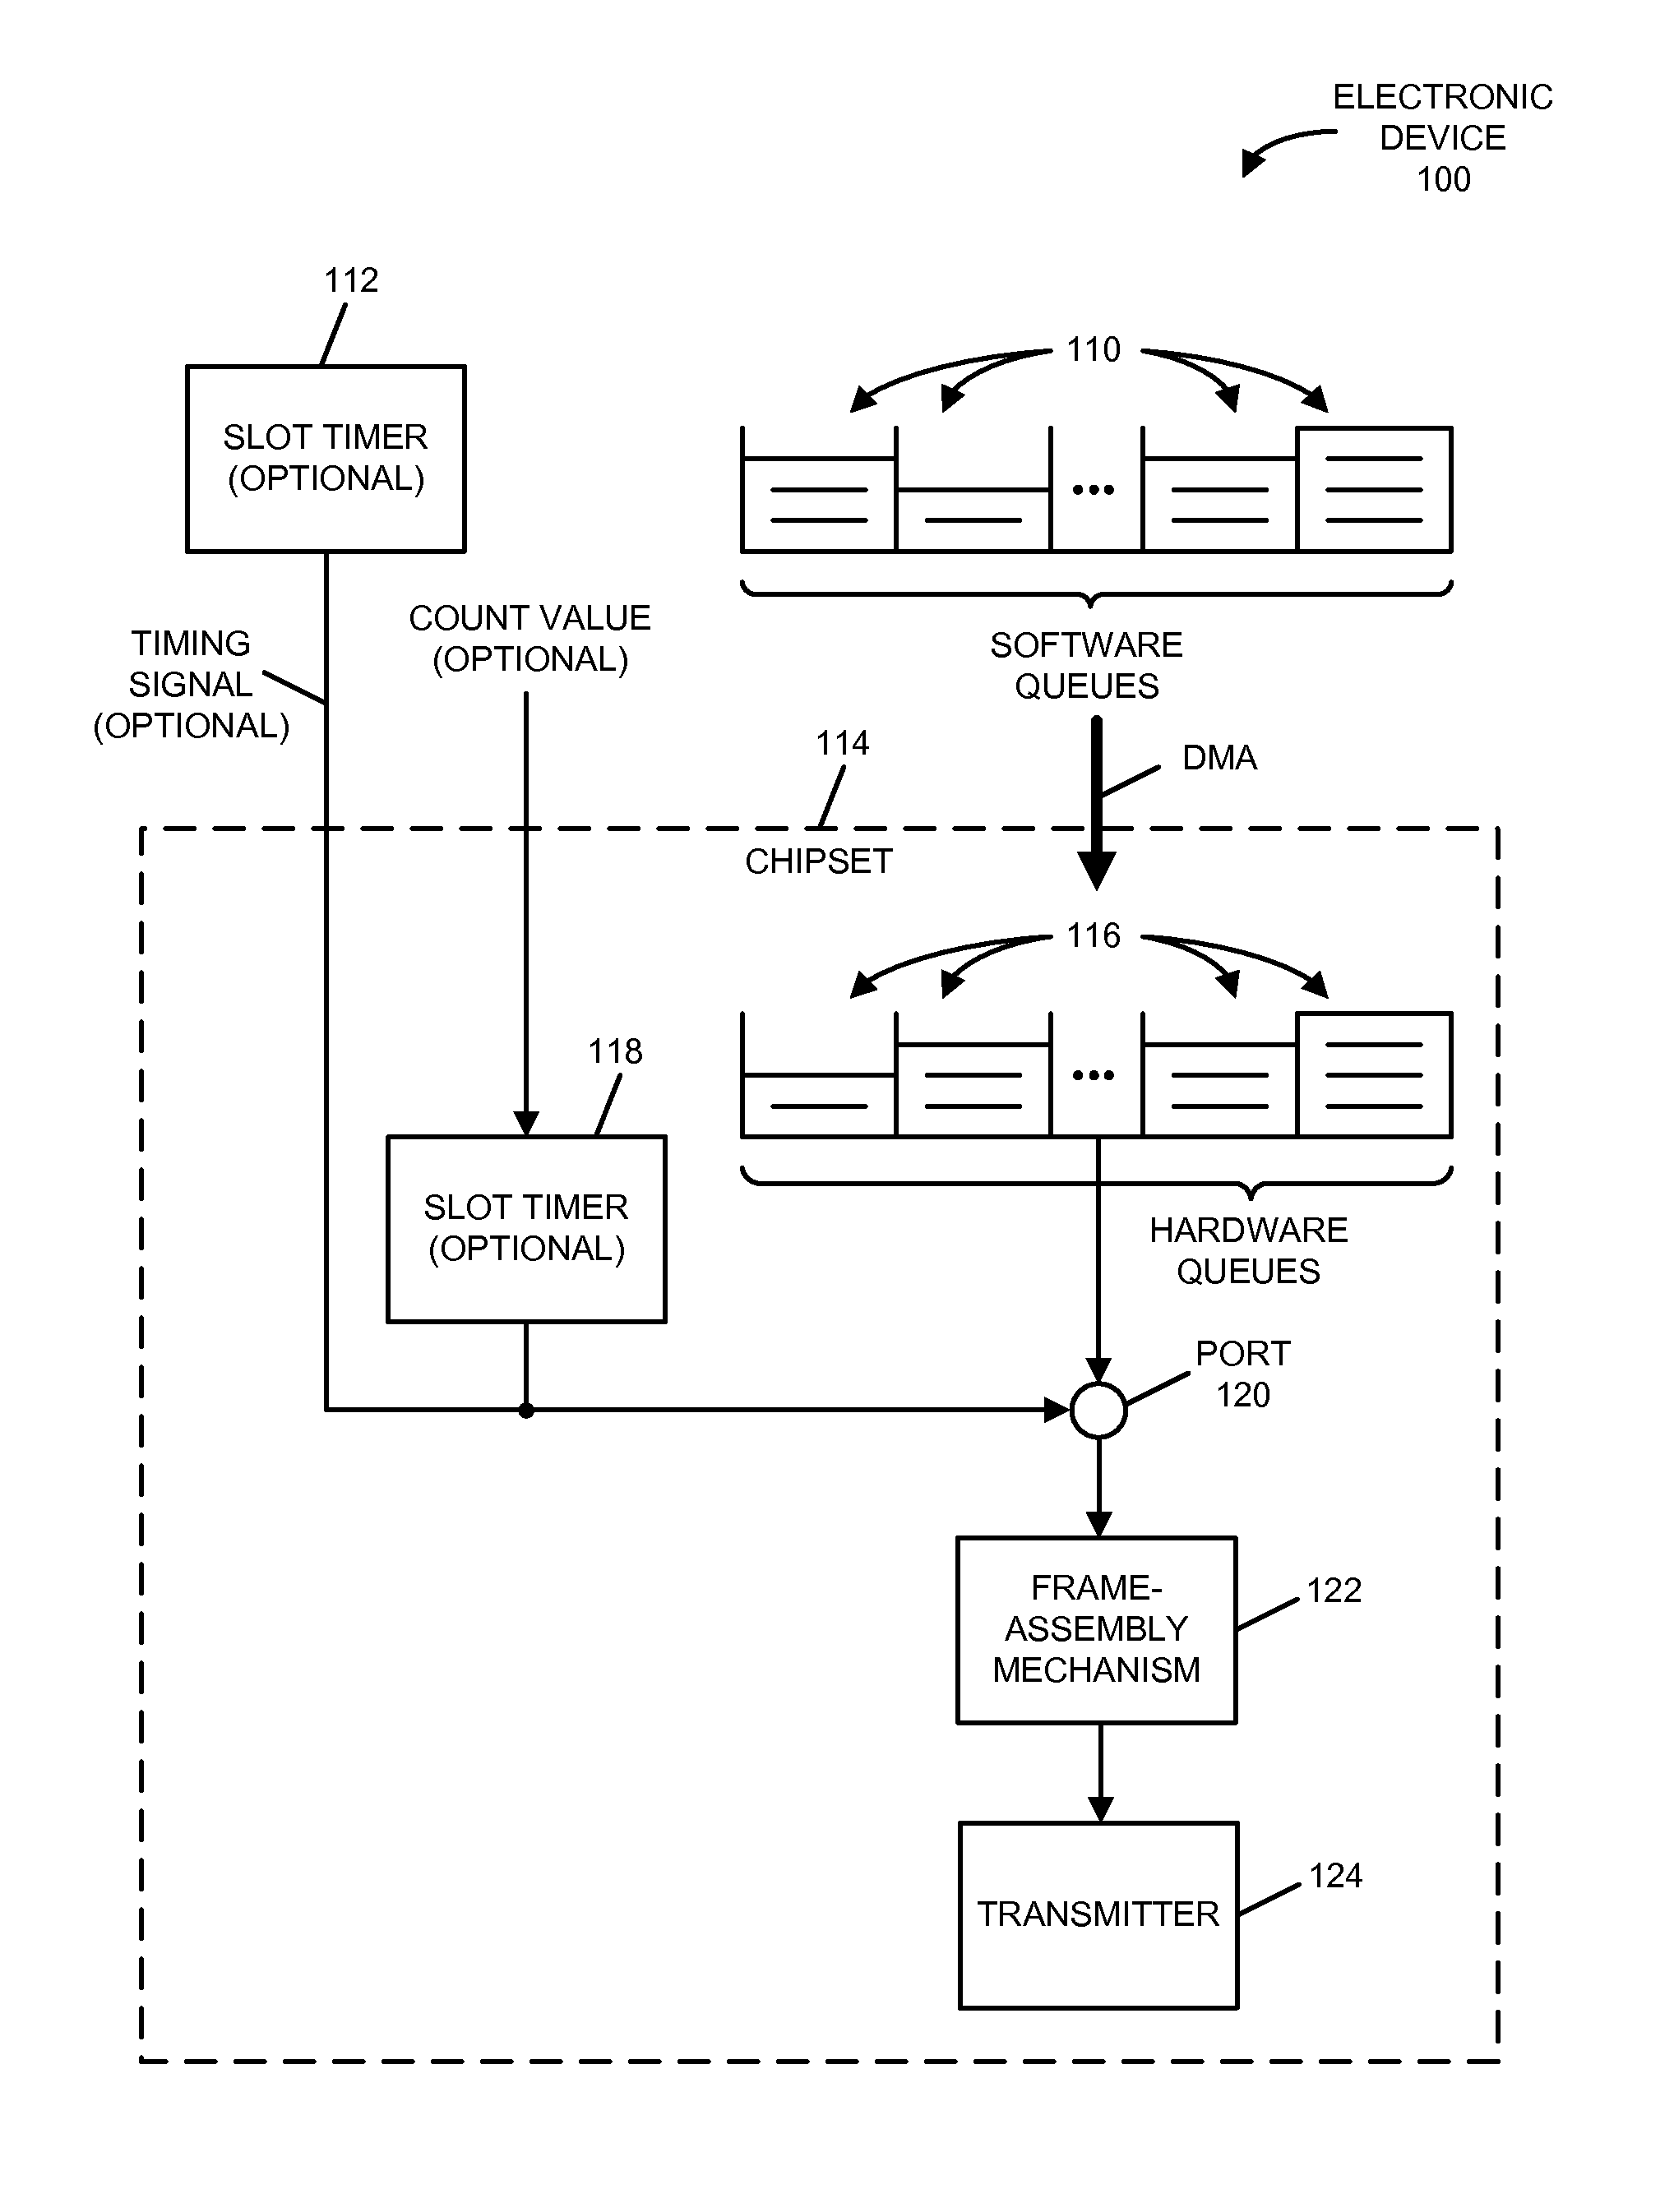 TDMA communication using a csma chipset